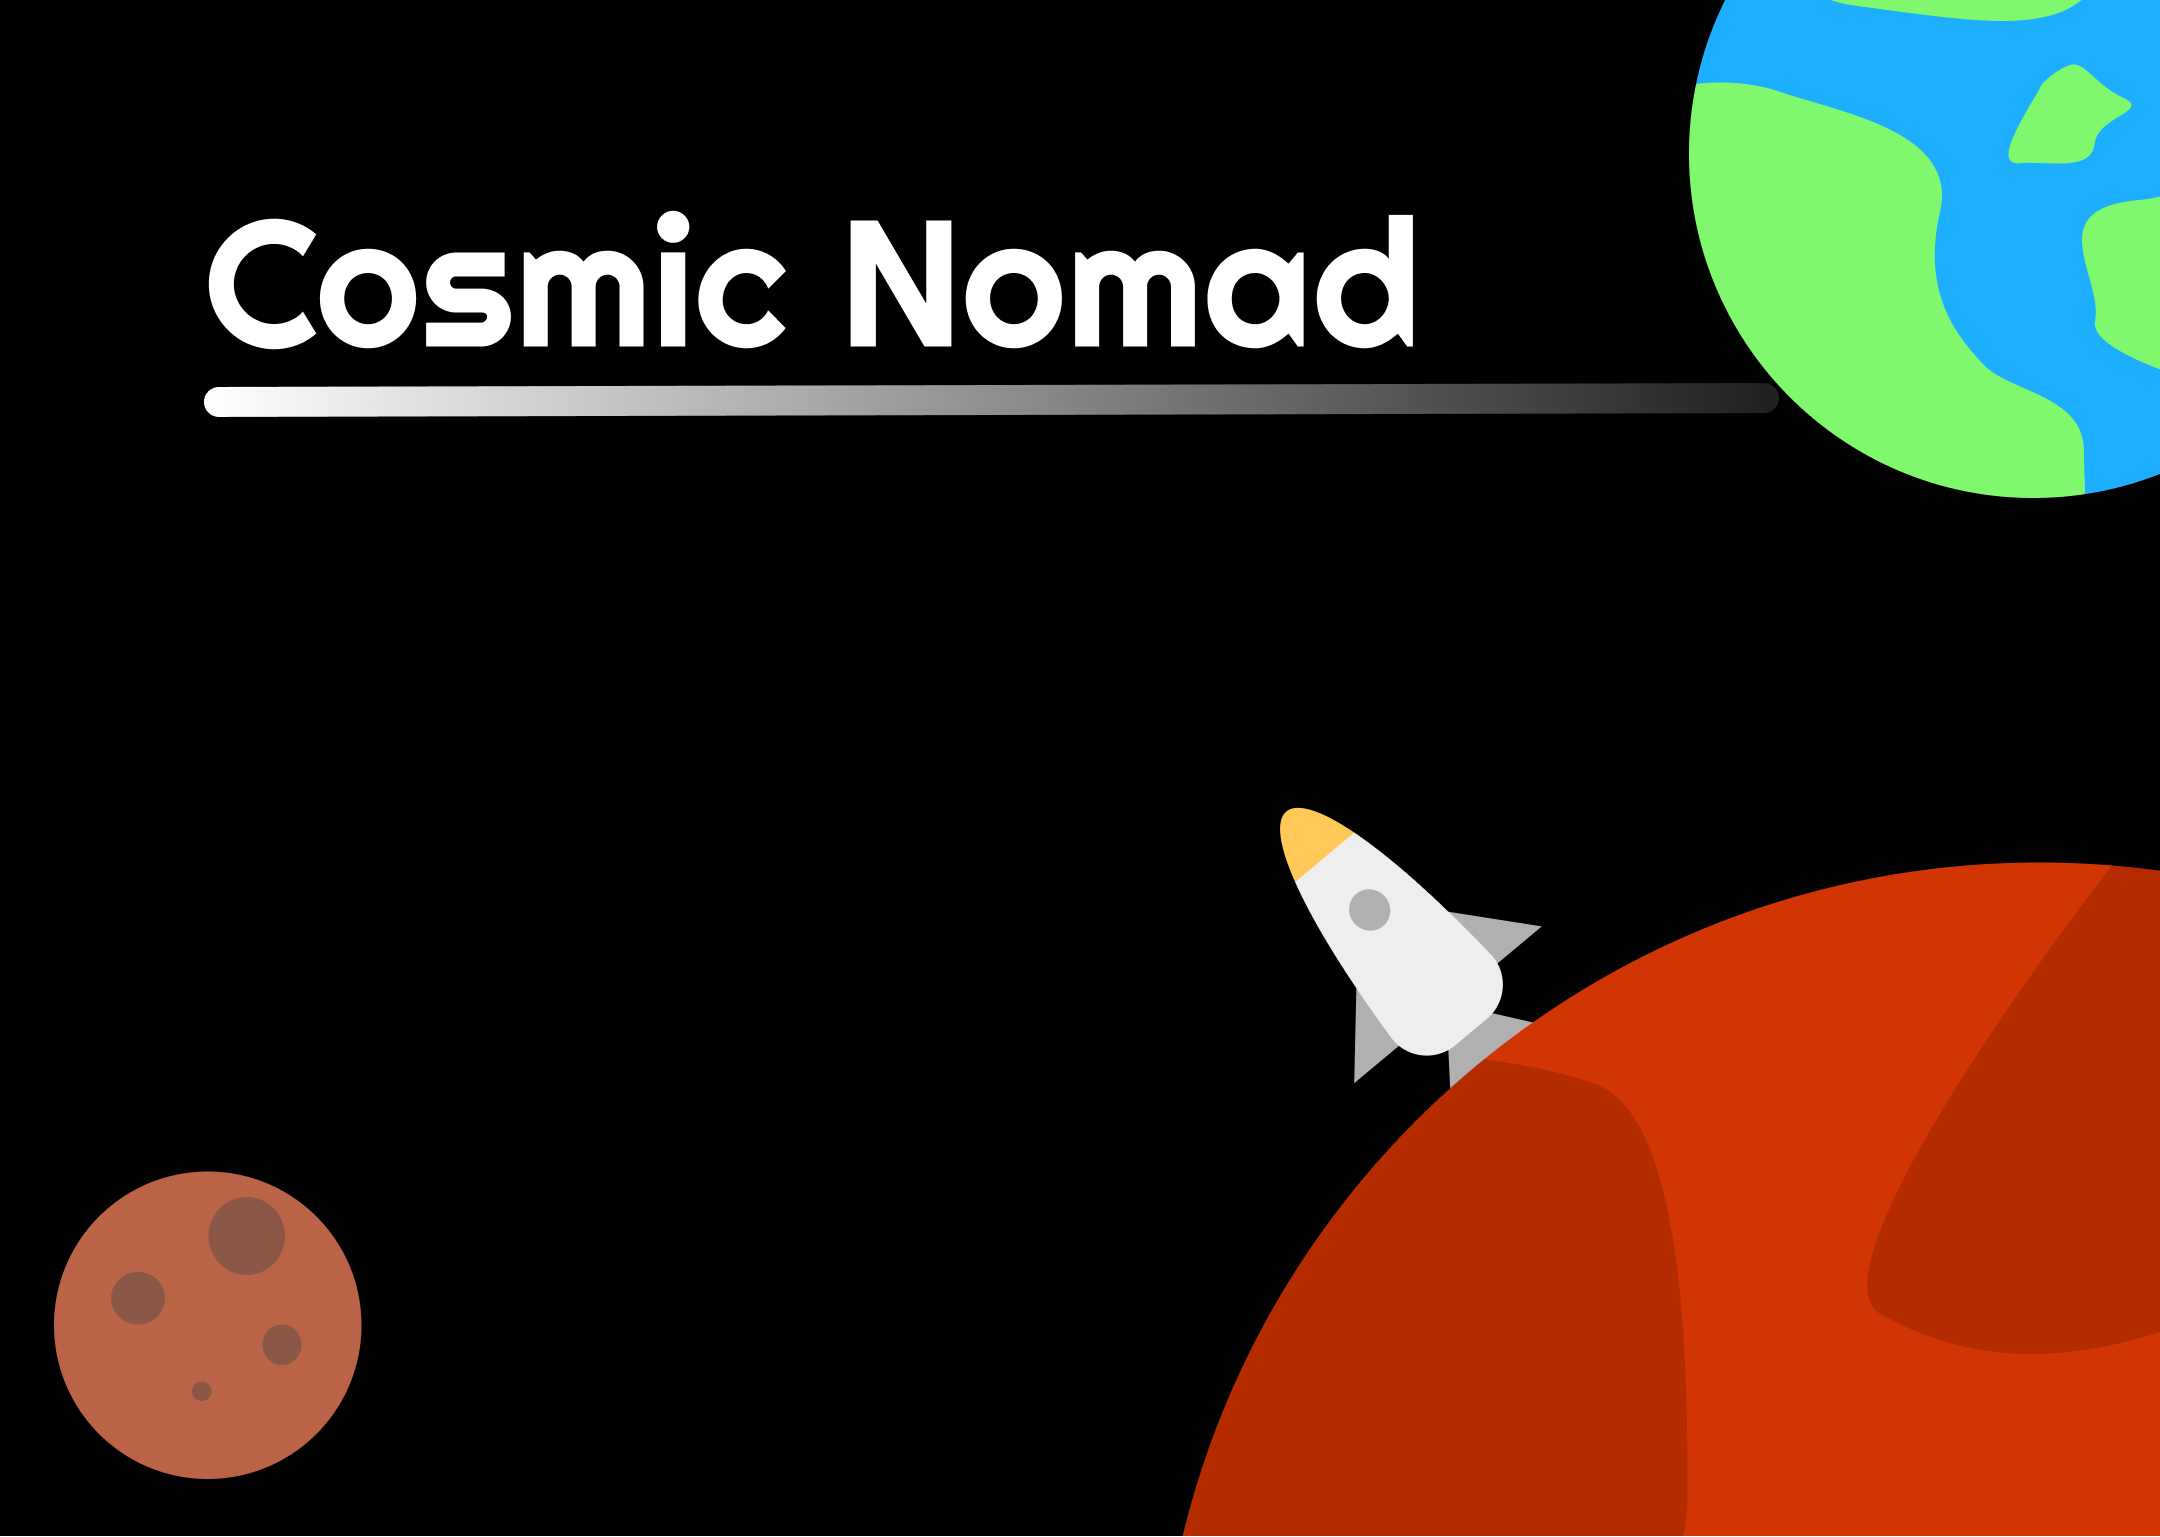 Cosmic Nomad